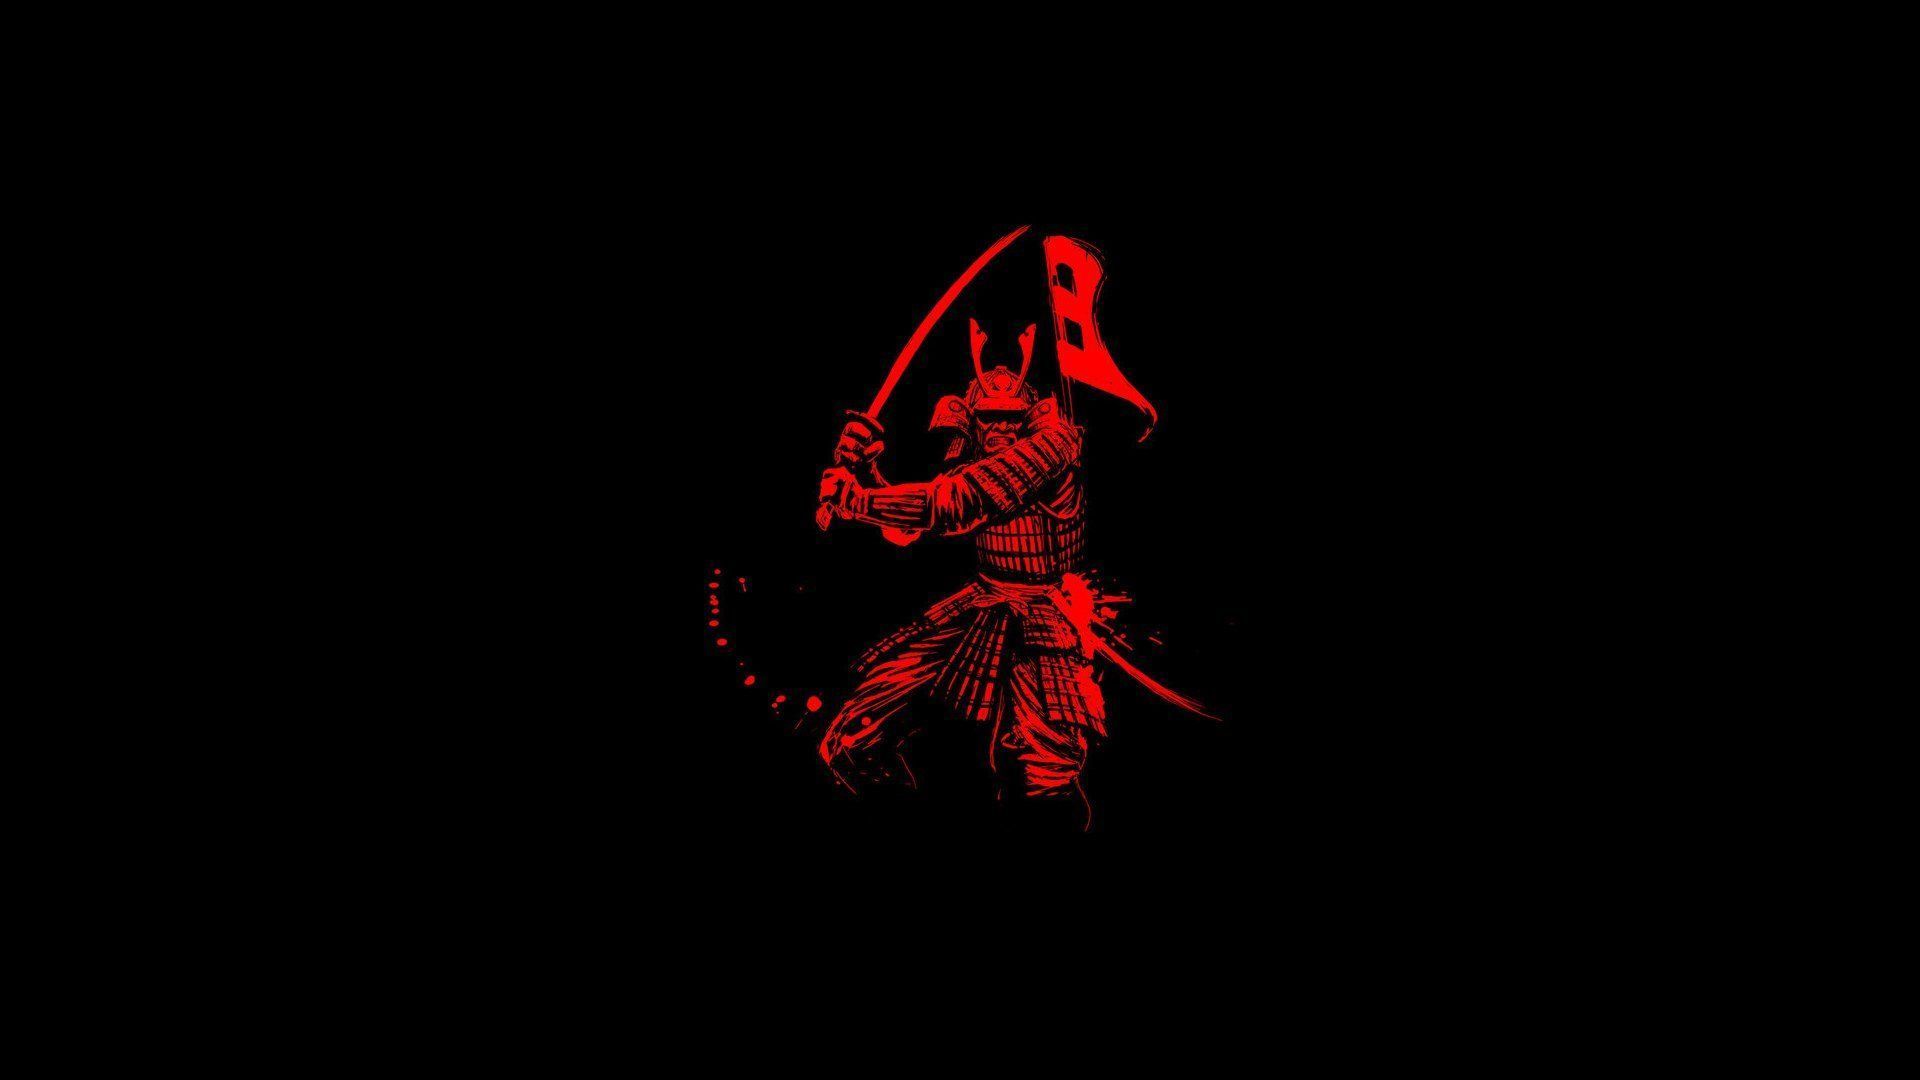 samurai warrior katana background HD wallpaper. Samurai wallpaper, Warriors wallpaper, Samurai warrior